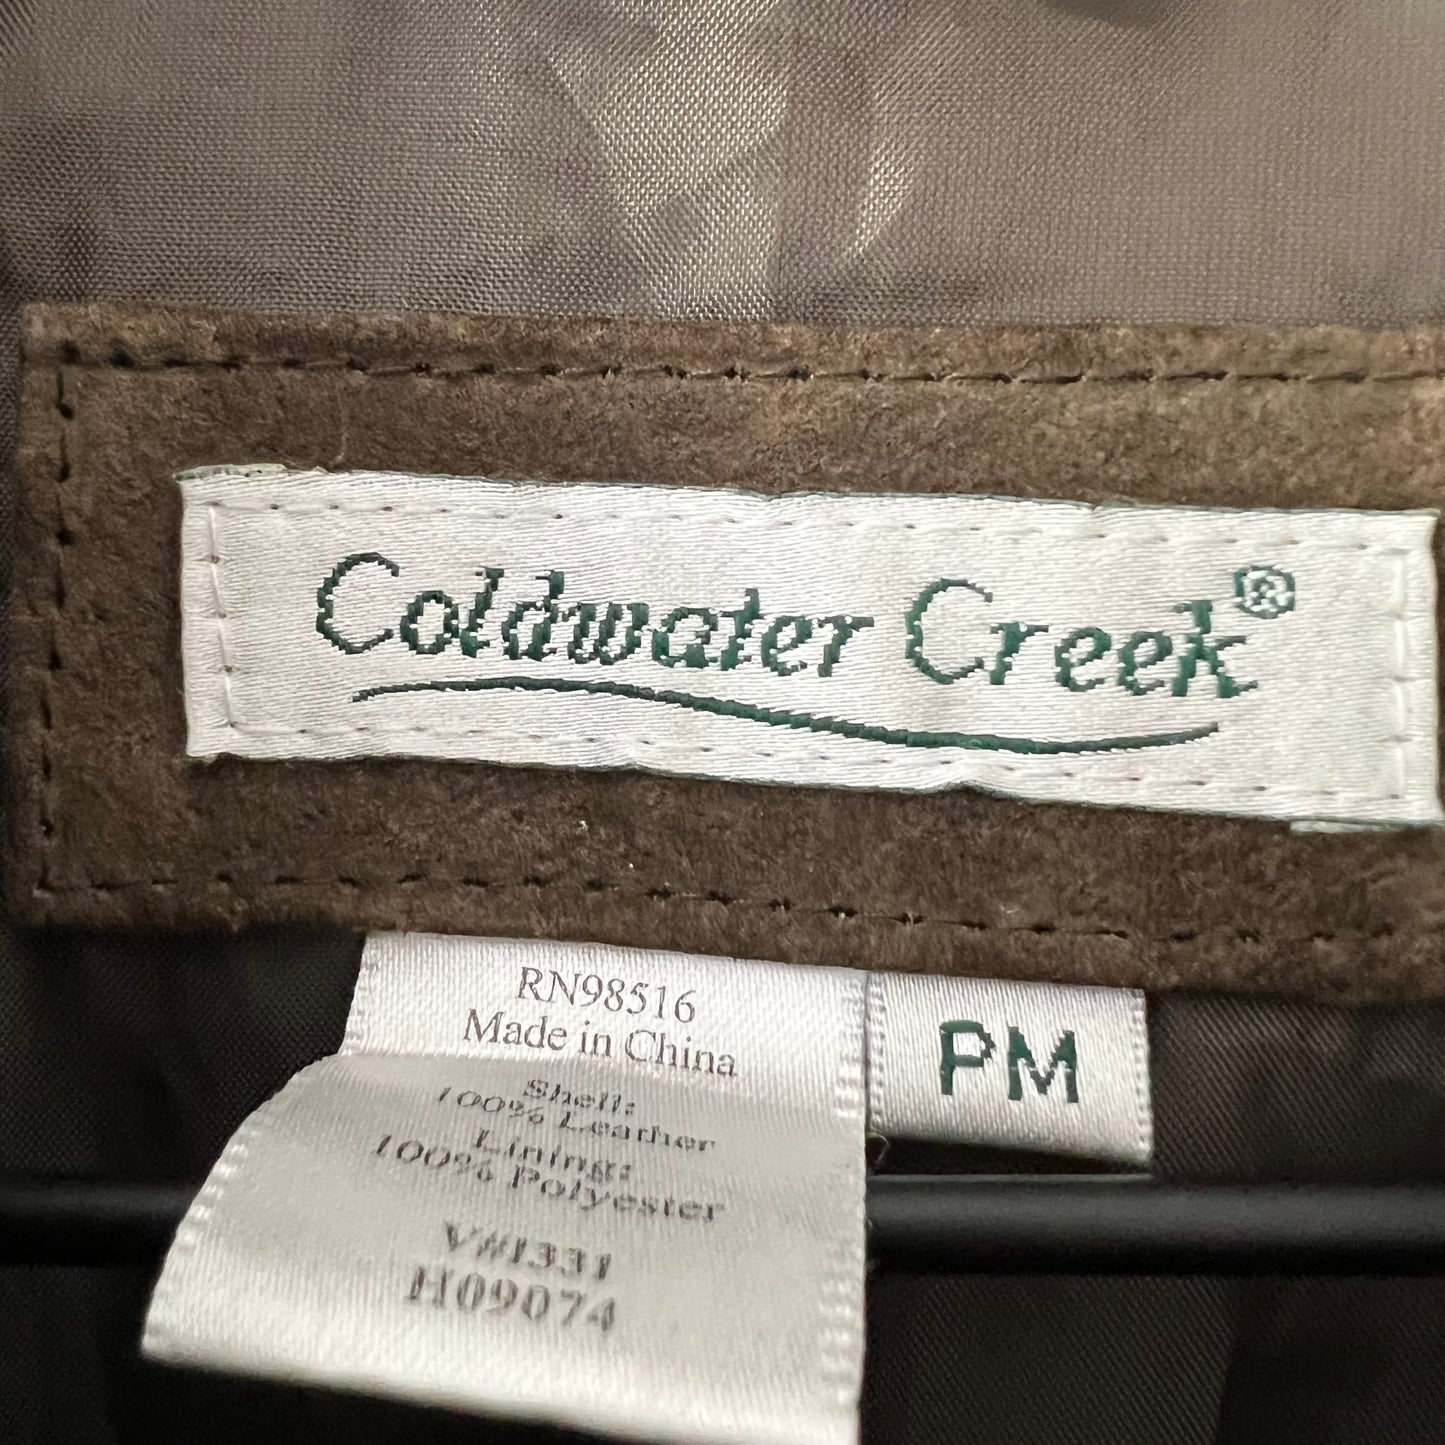 Coldwater Creek Vintage Leather Jacket